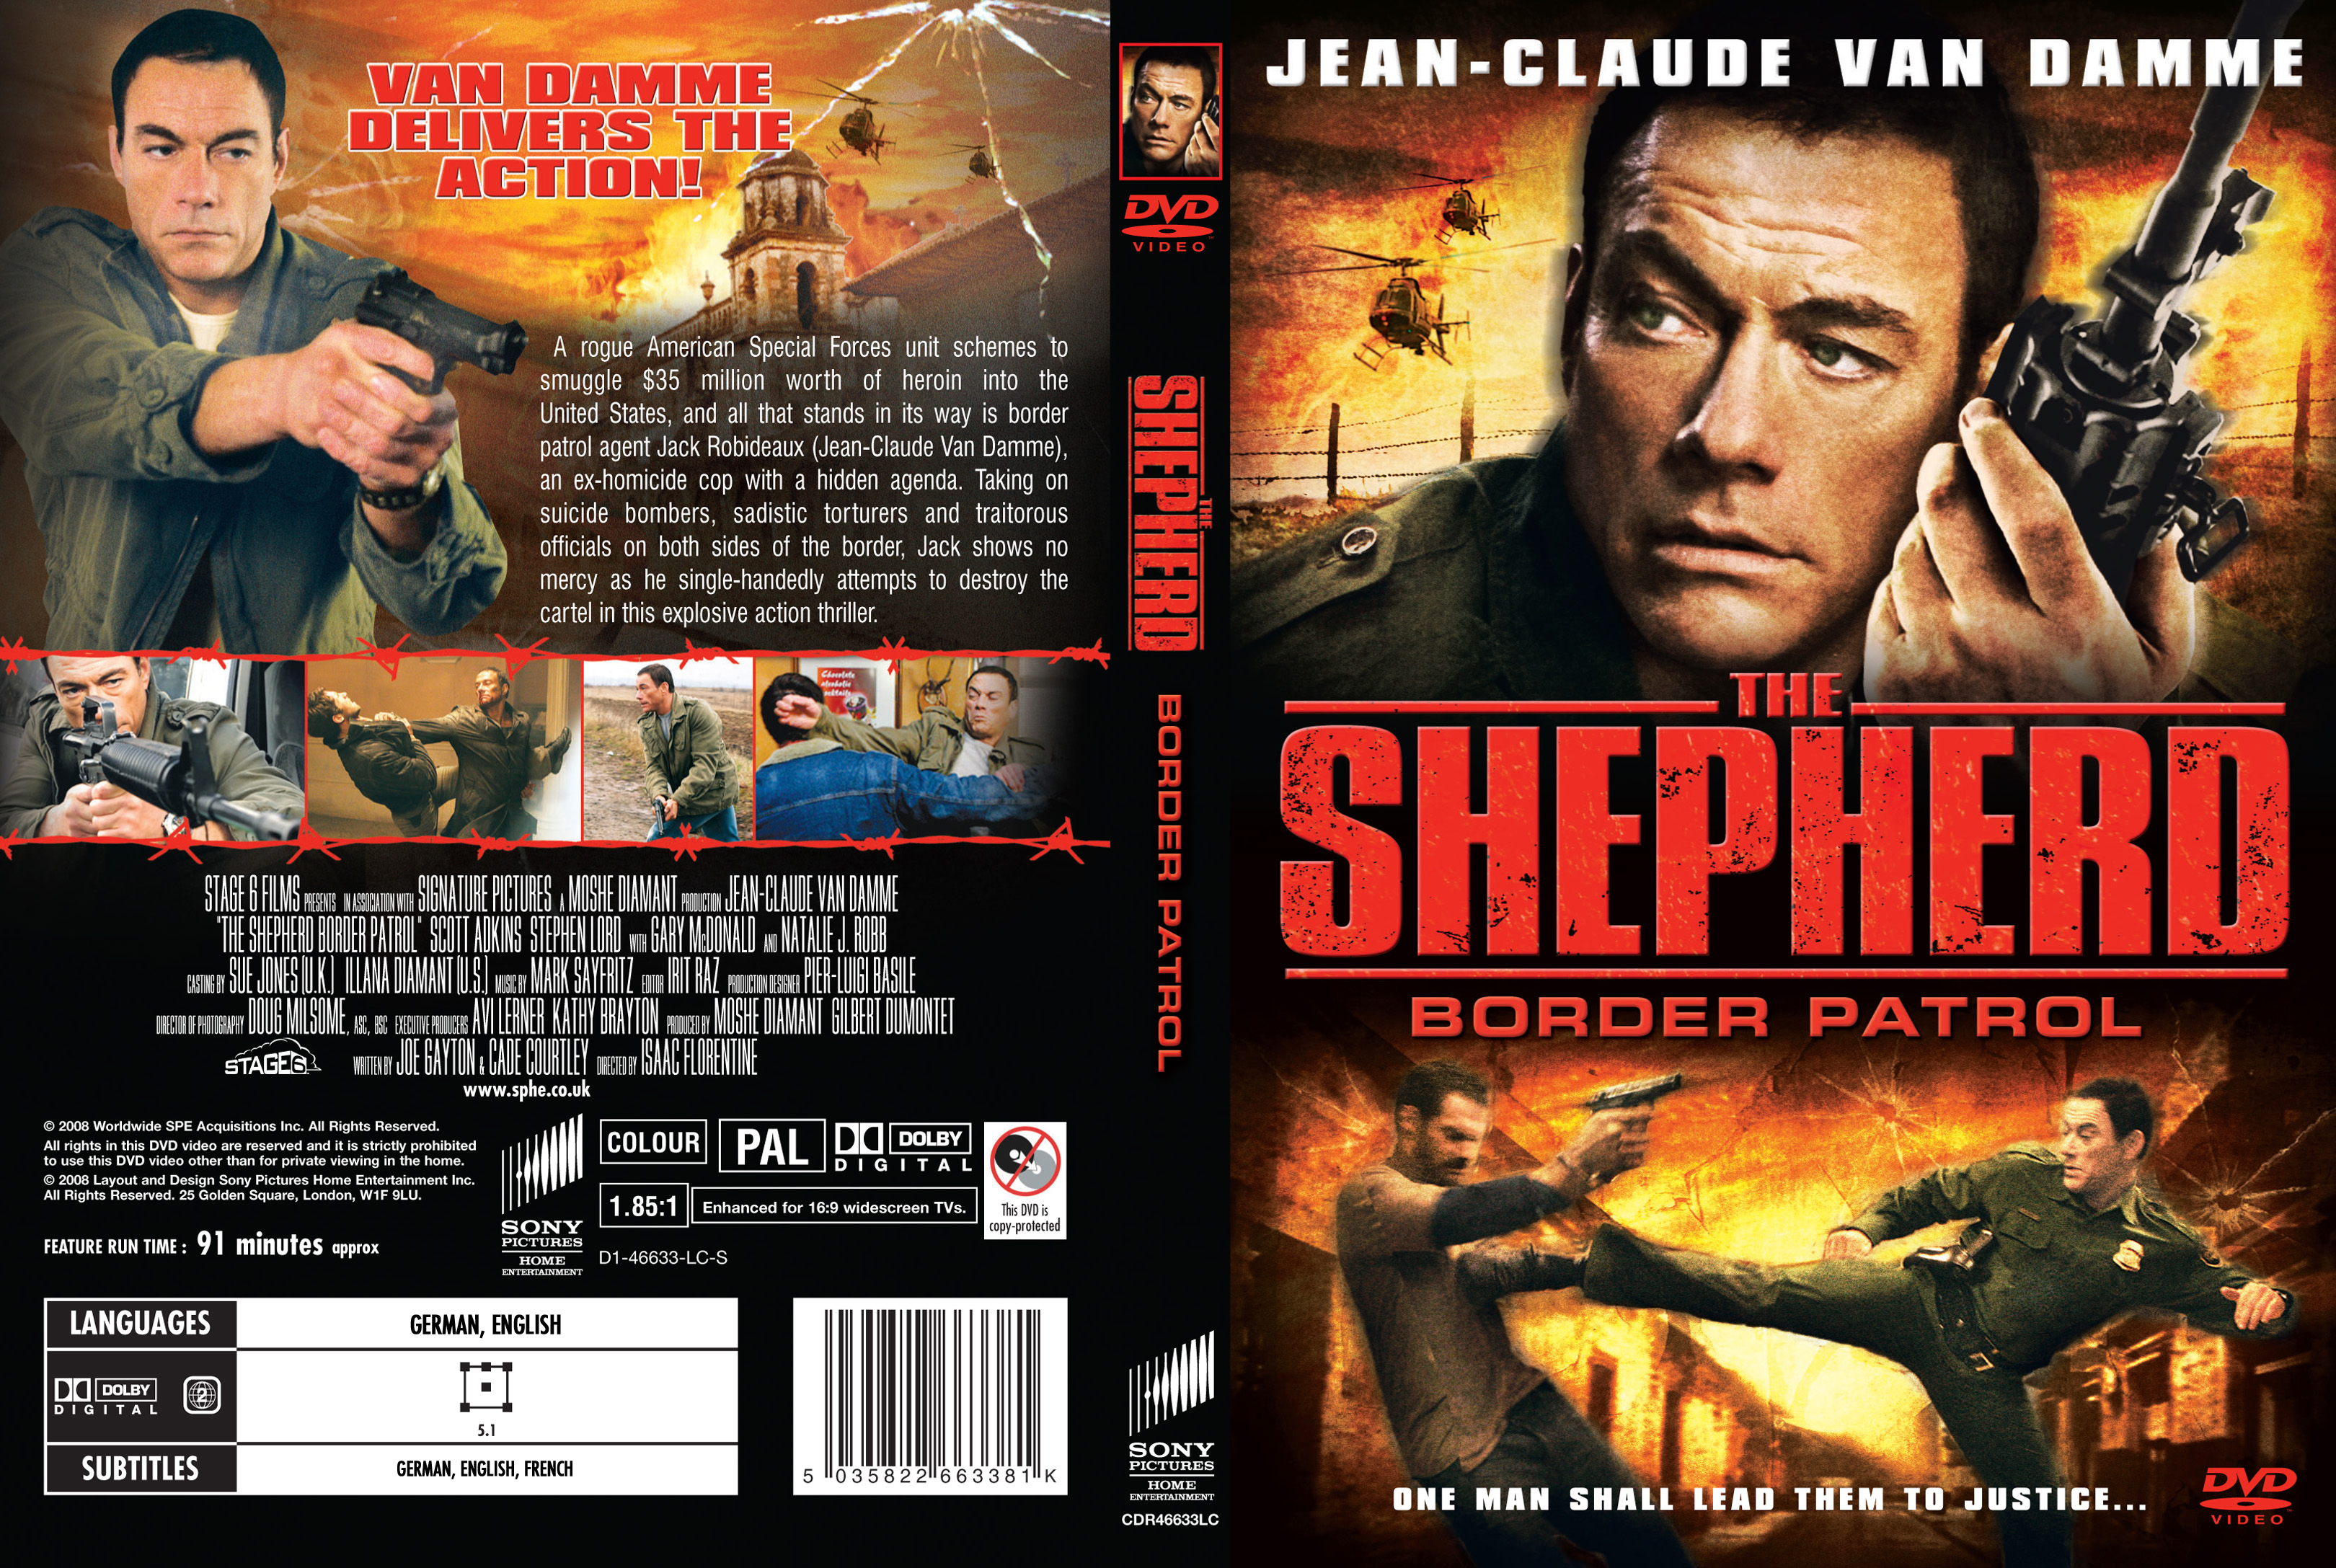 Jaquette DVD The shepherd - Border patrol